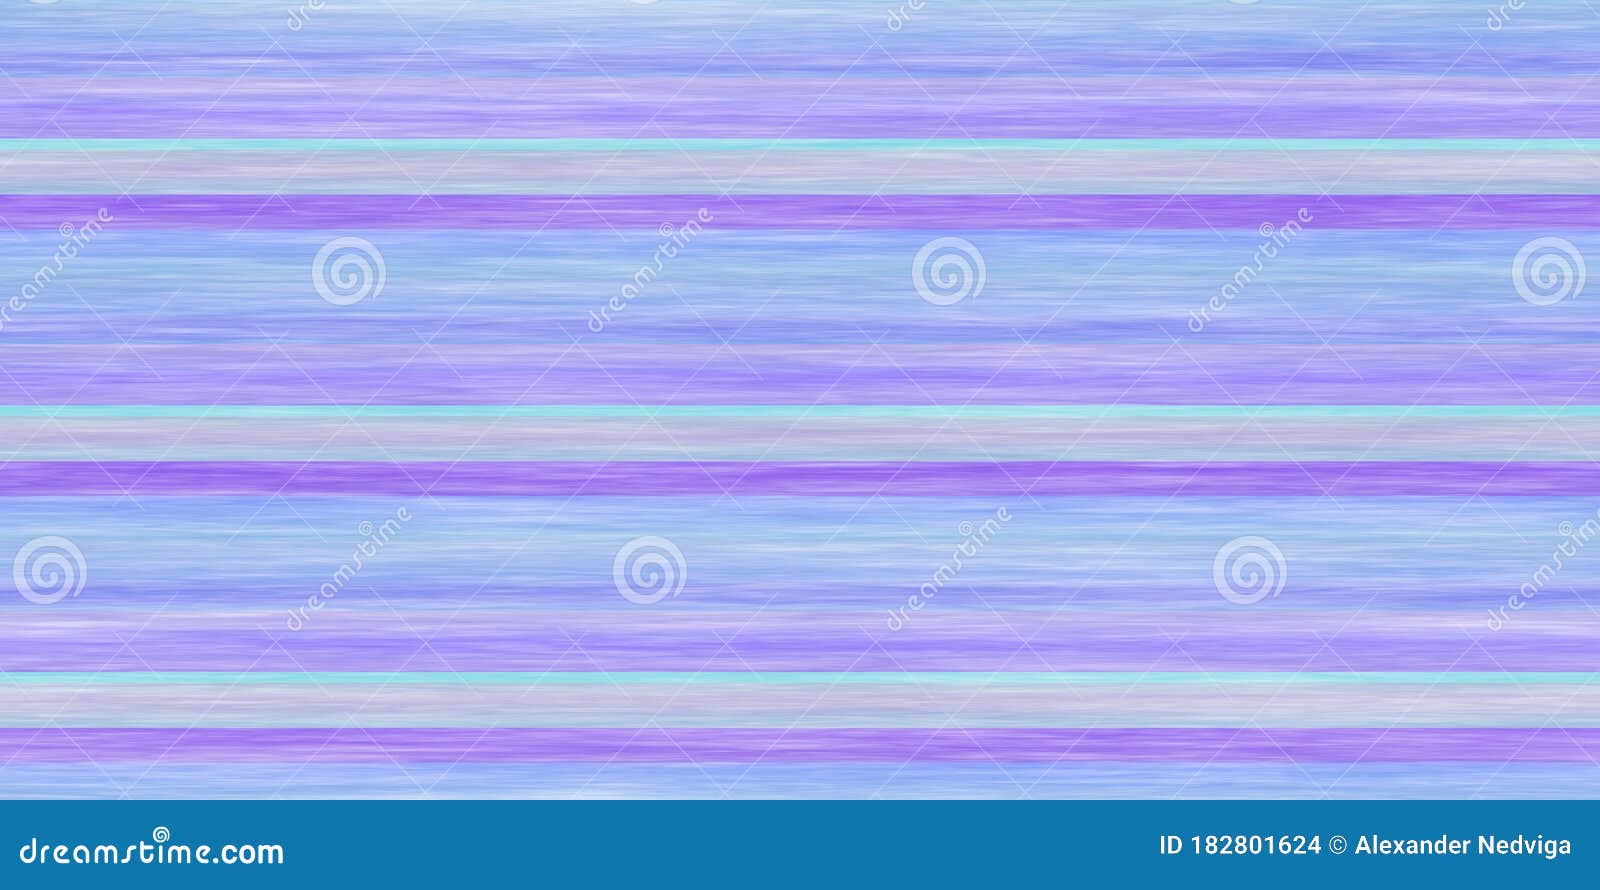 lilac purple scrapbook sherbert background